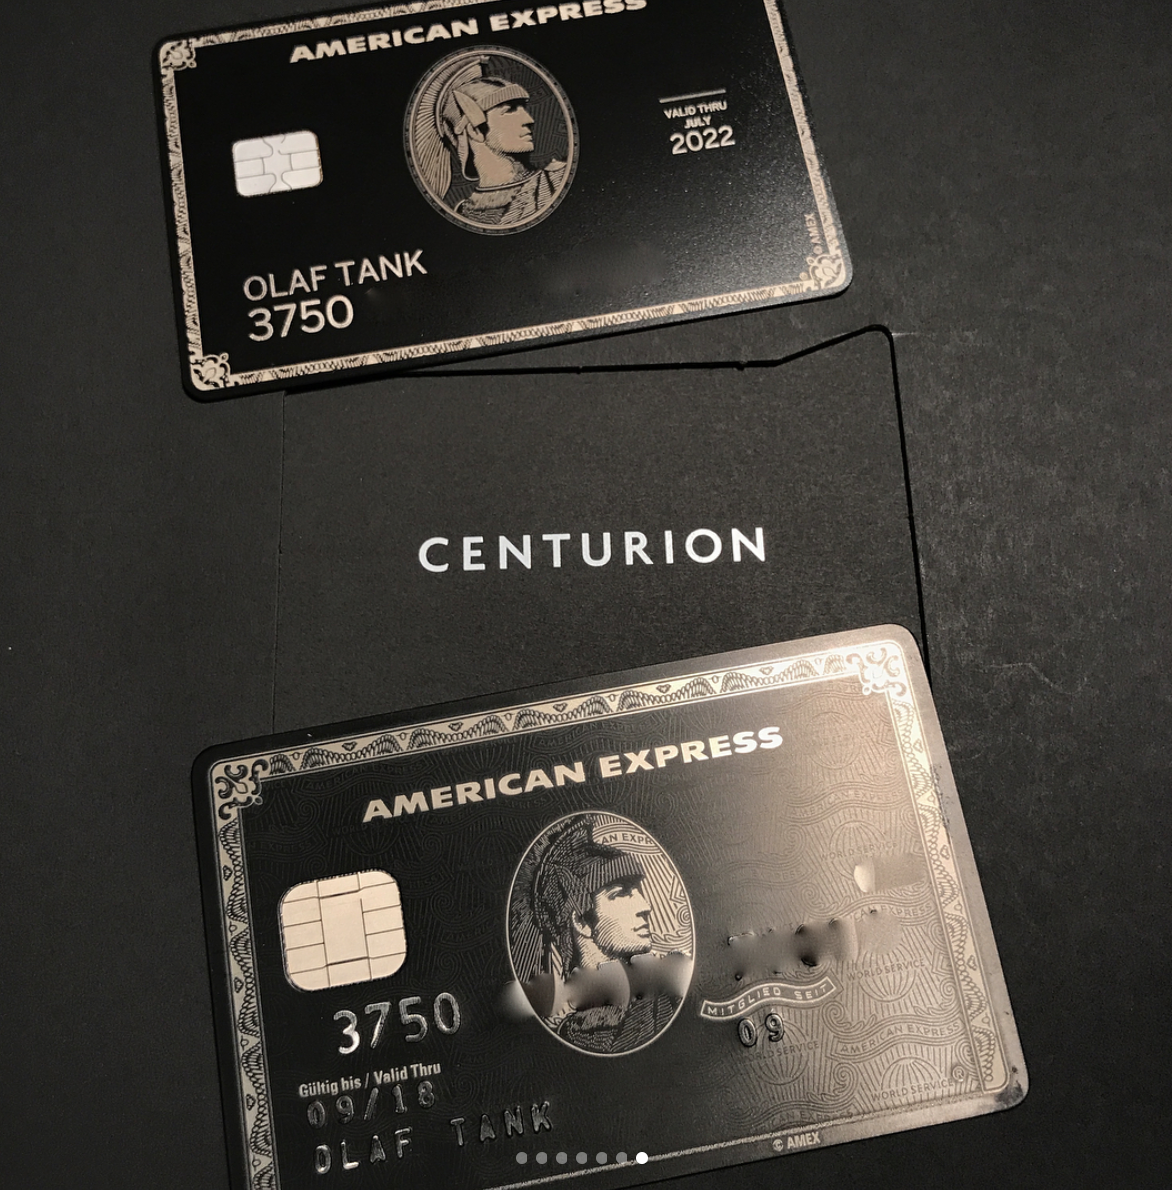 centurion card benefits australia